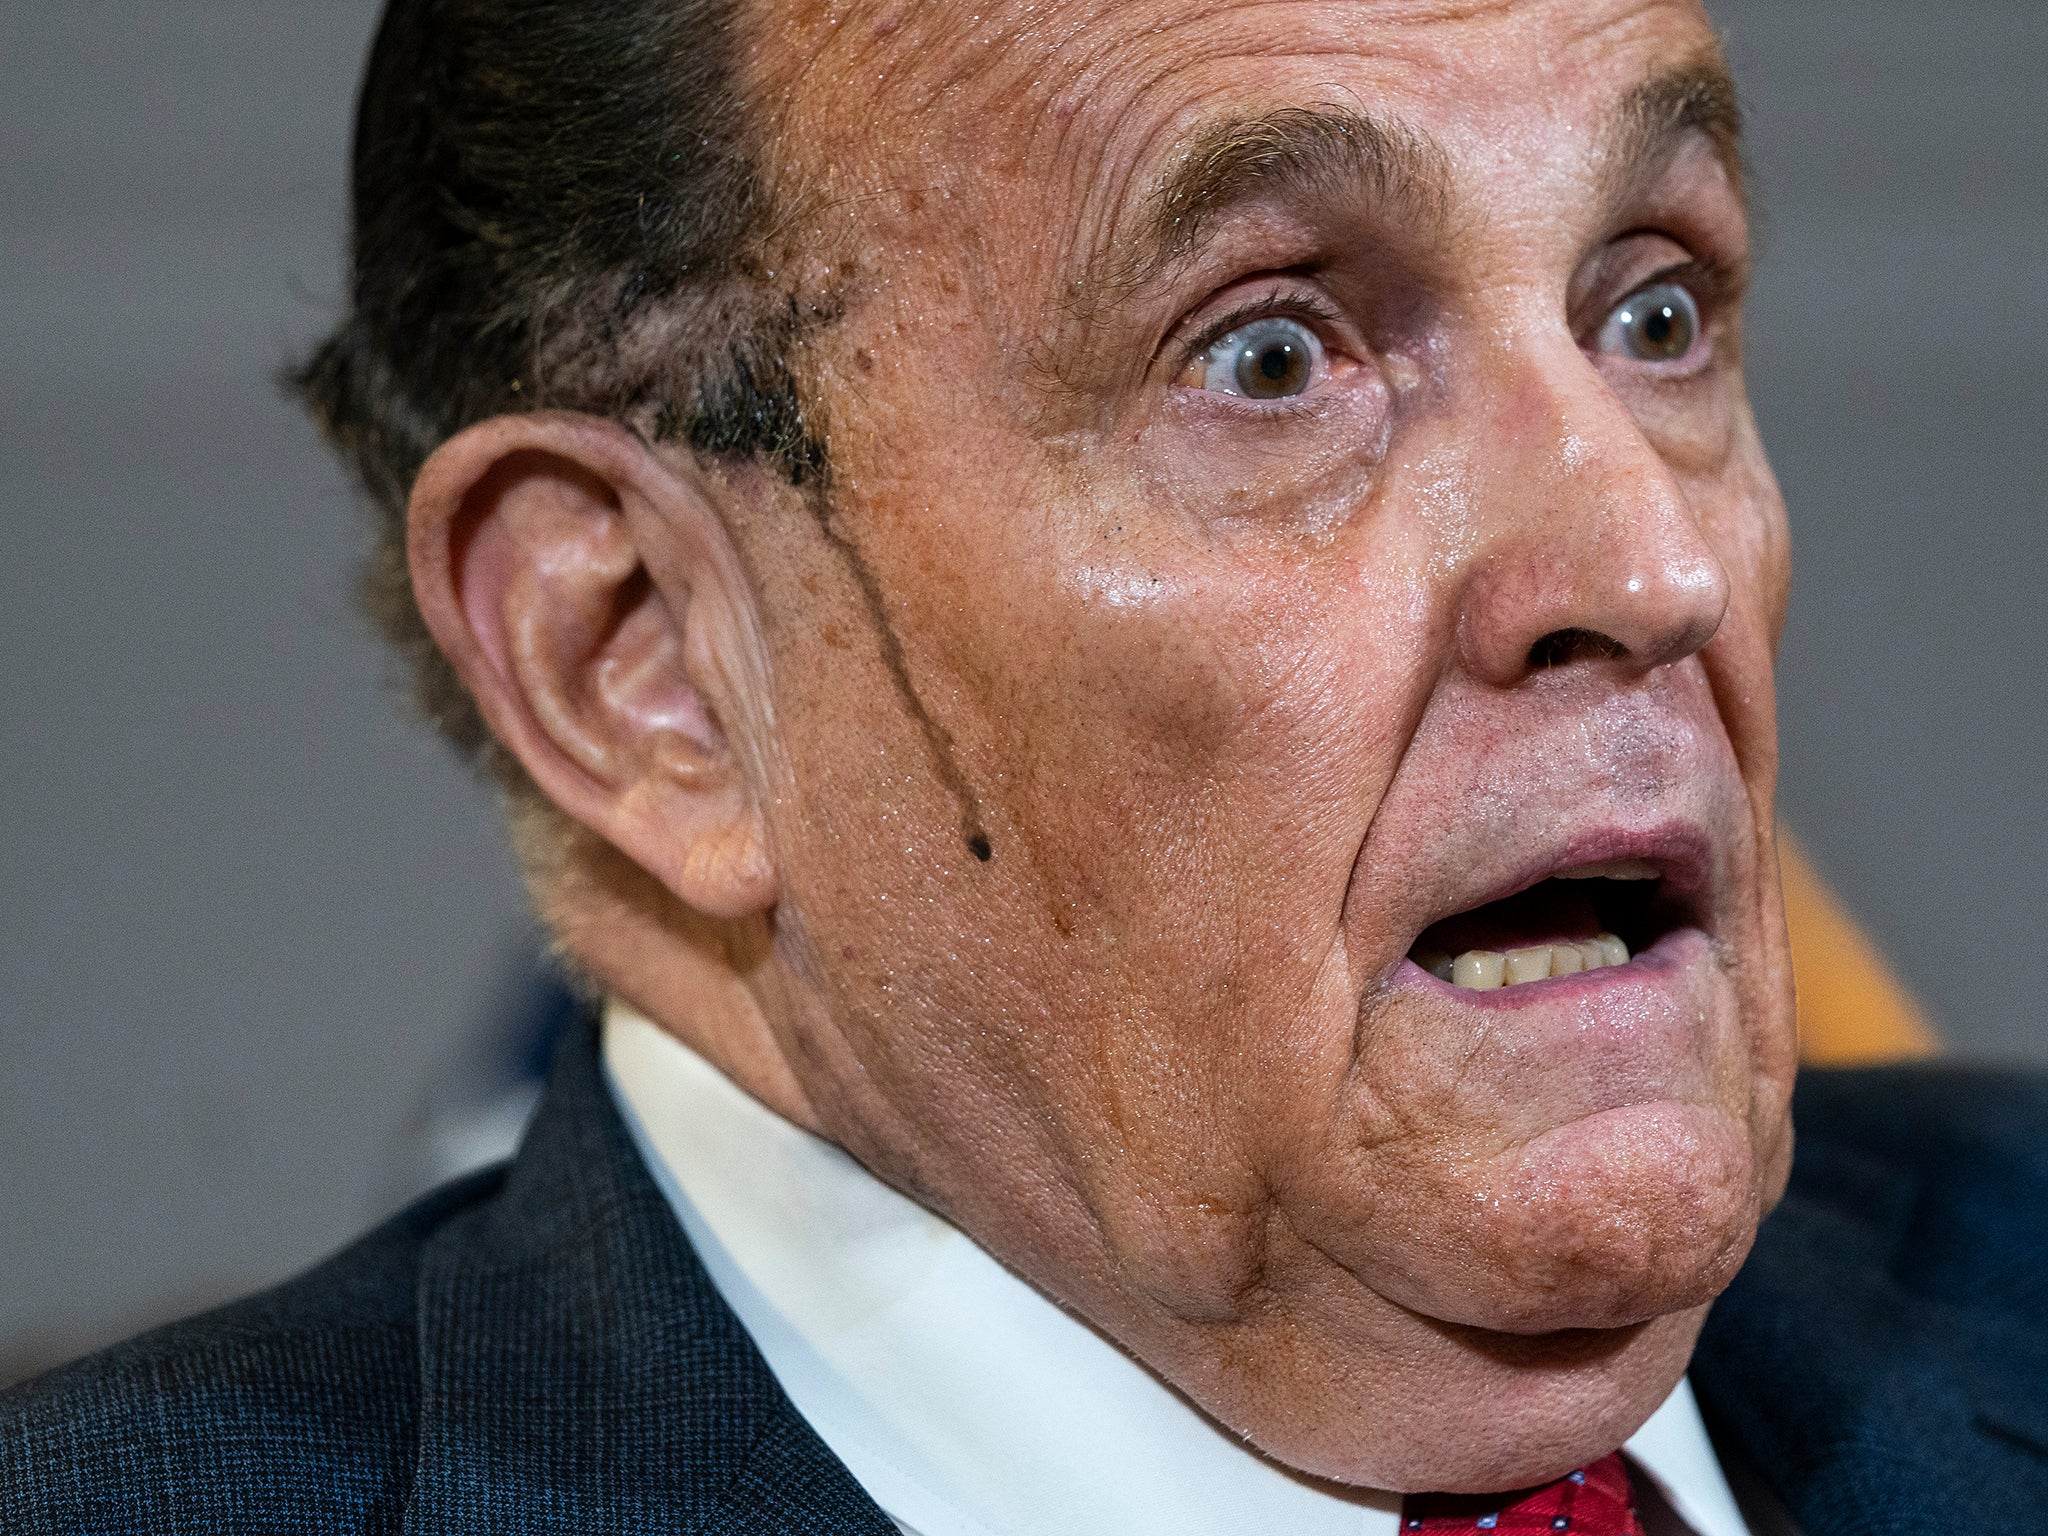 Hair dye runs down Giuliani’s cheek during a bizarre press conference in November 2020